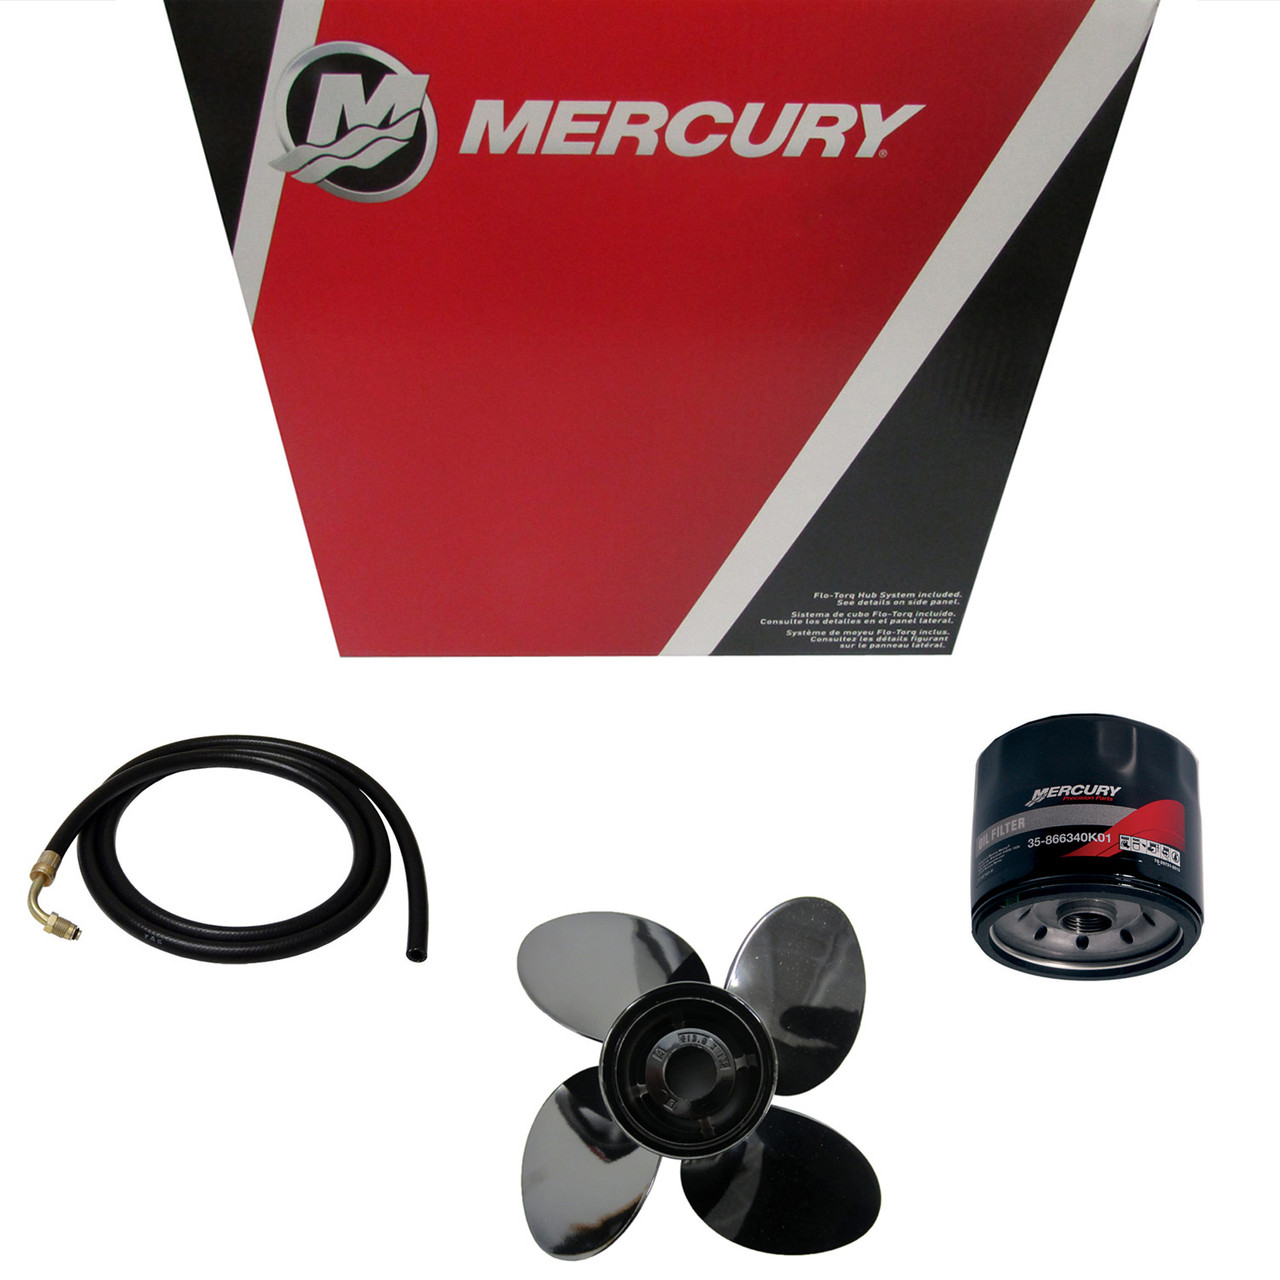 Mercury Marine / Mercruiser New OEM Solenoid, 819503T6